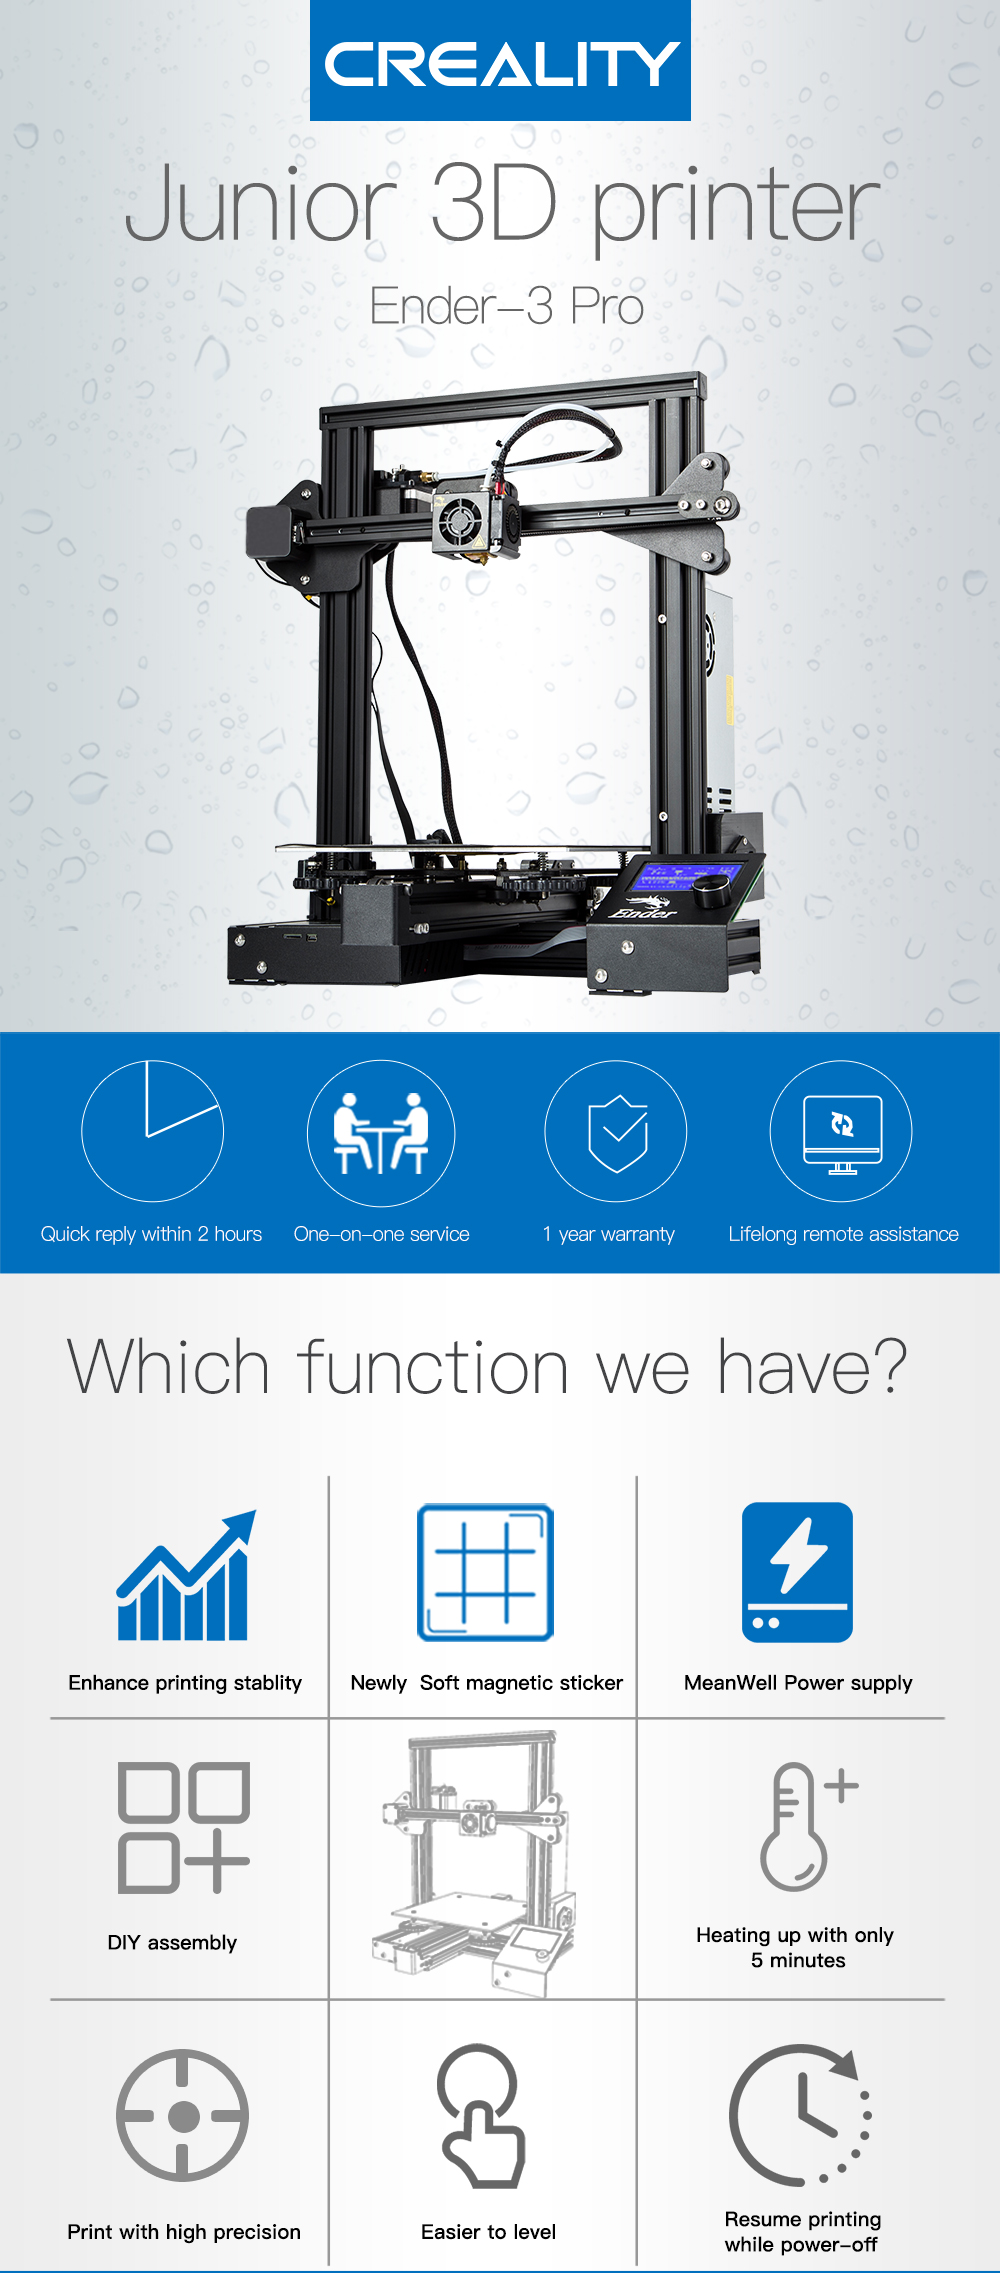 Creality 3D® Ender-3 Pro V-slot Prusa I3 DIY 3D Printer 220x220x250mm Printing Size With Magnetic Removable Platform Sticker/Power Resume Function/Off-line Print/Patent MK10 Extruder/Simple Leveling 6